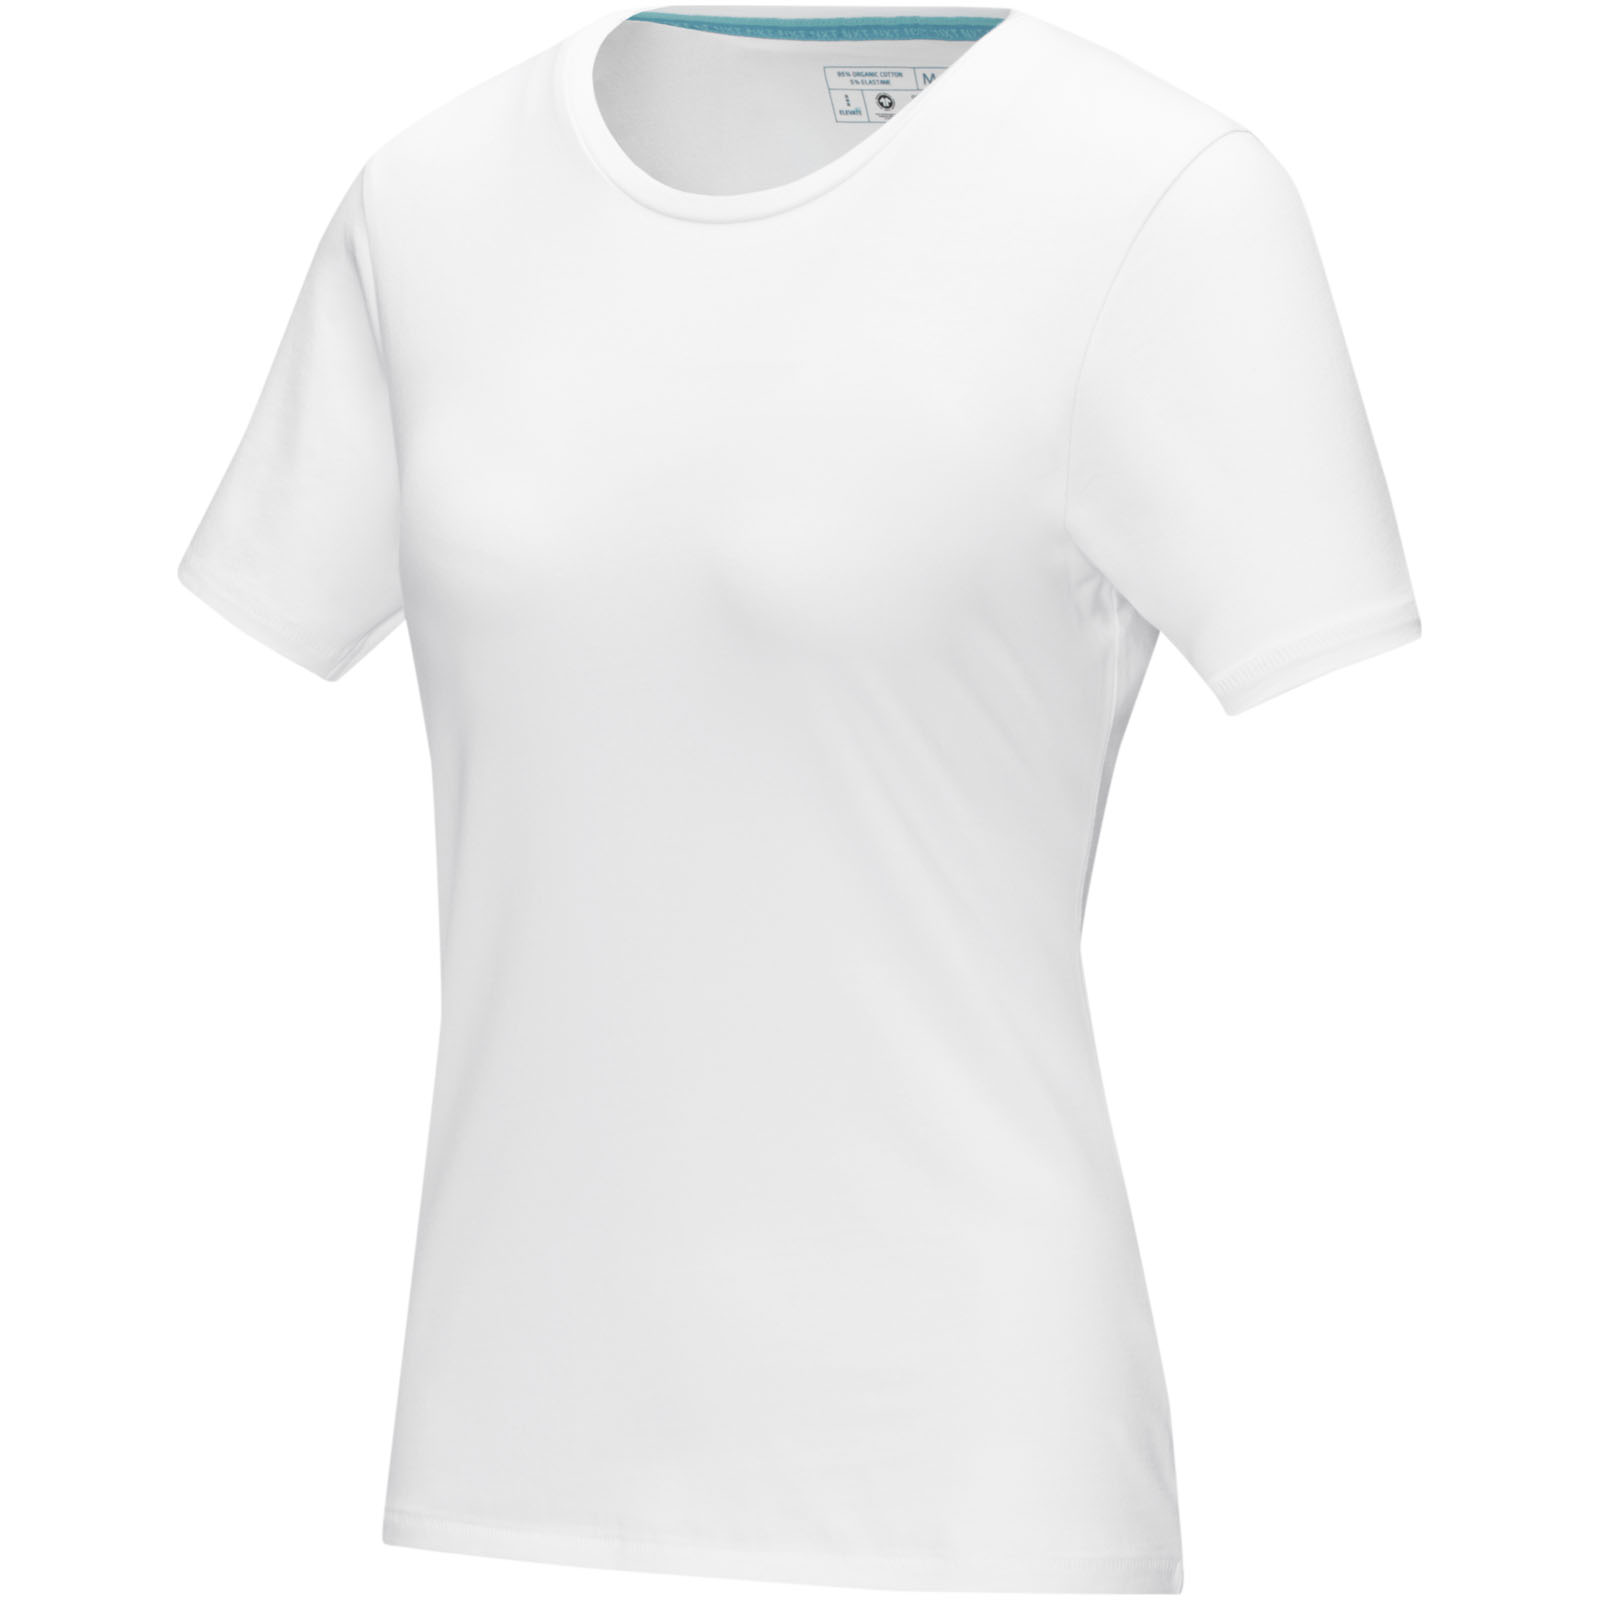 T-shirt en coton biologique - Cucugnan - Zaprinta Belgique